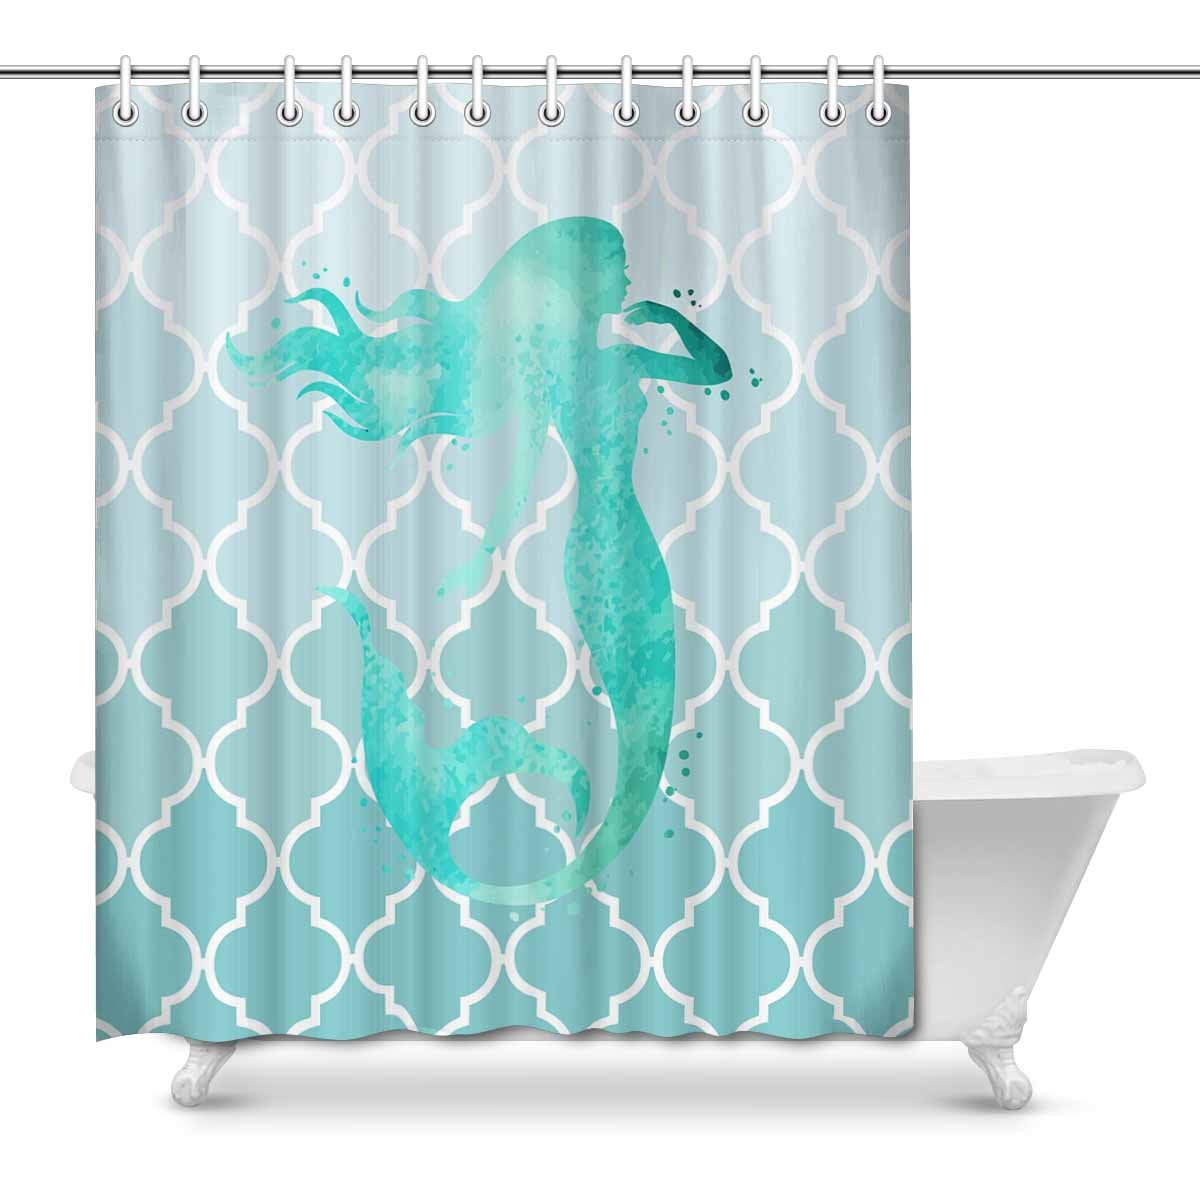 Details about   Deep Sea Bright Blue Mermaid Shower Curtain Home Bathroom Decor Fabric & 12hooks 